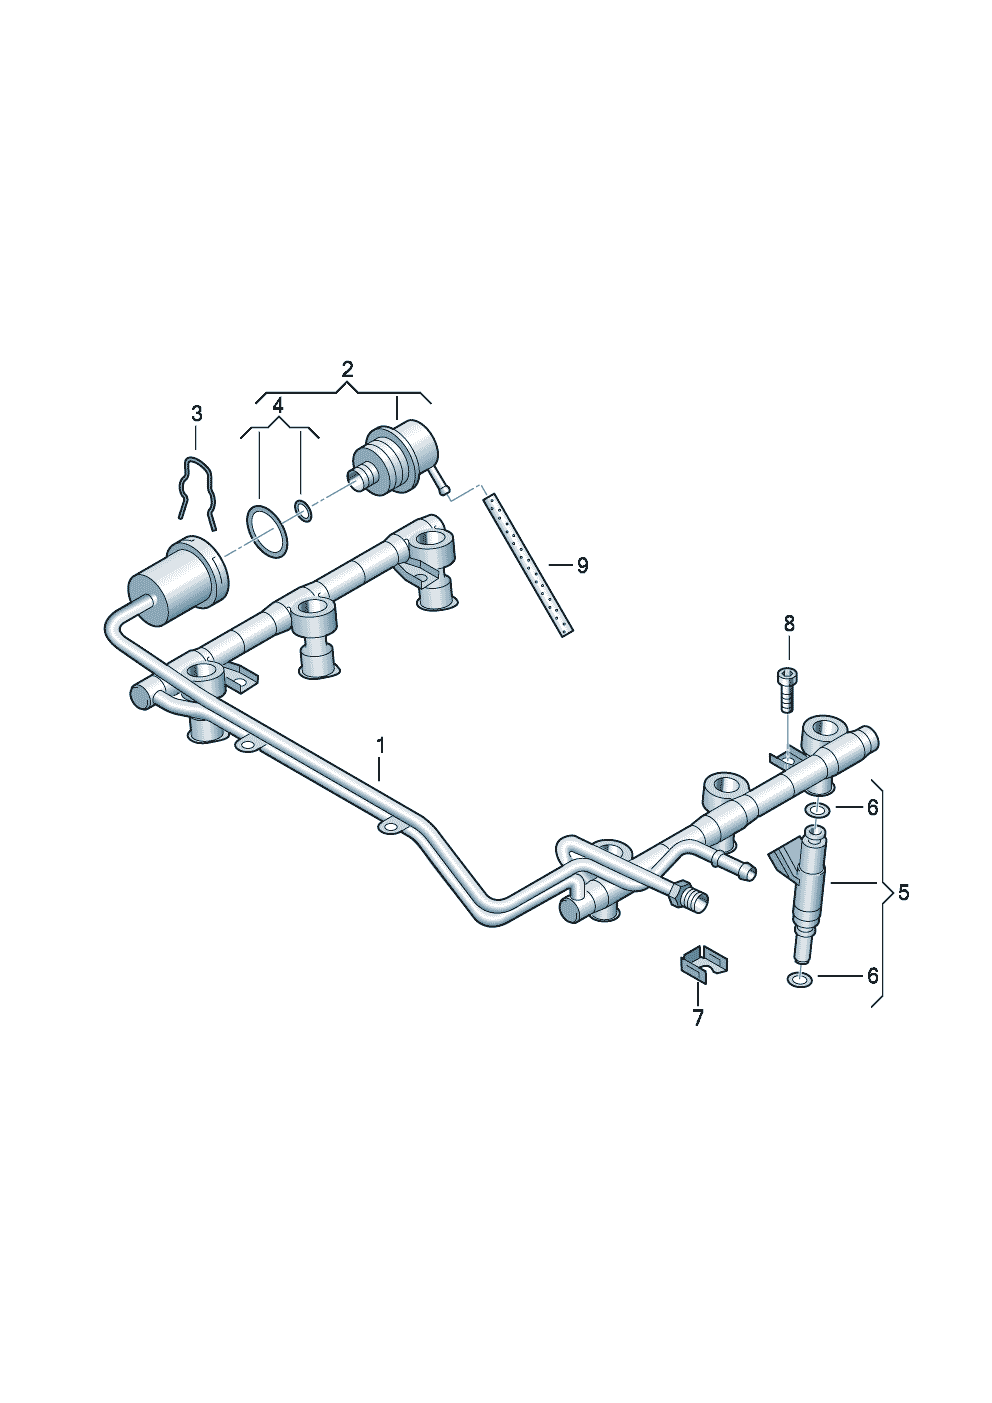 Fuel railInjection valvepressure regulator 2.4ltr. - Audi A4/Avant - a4